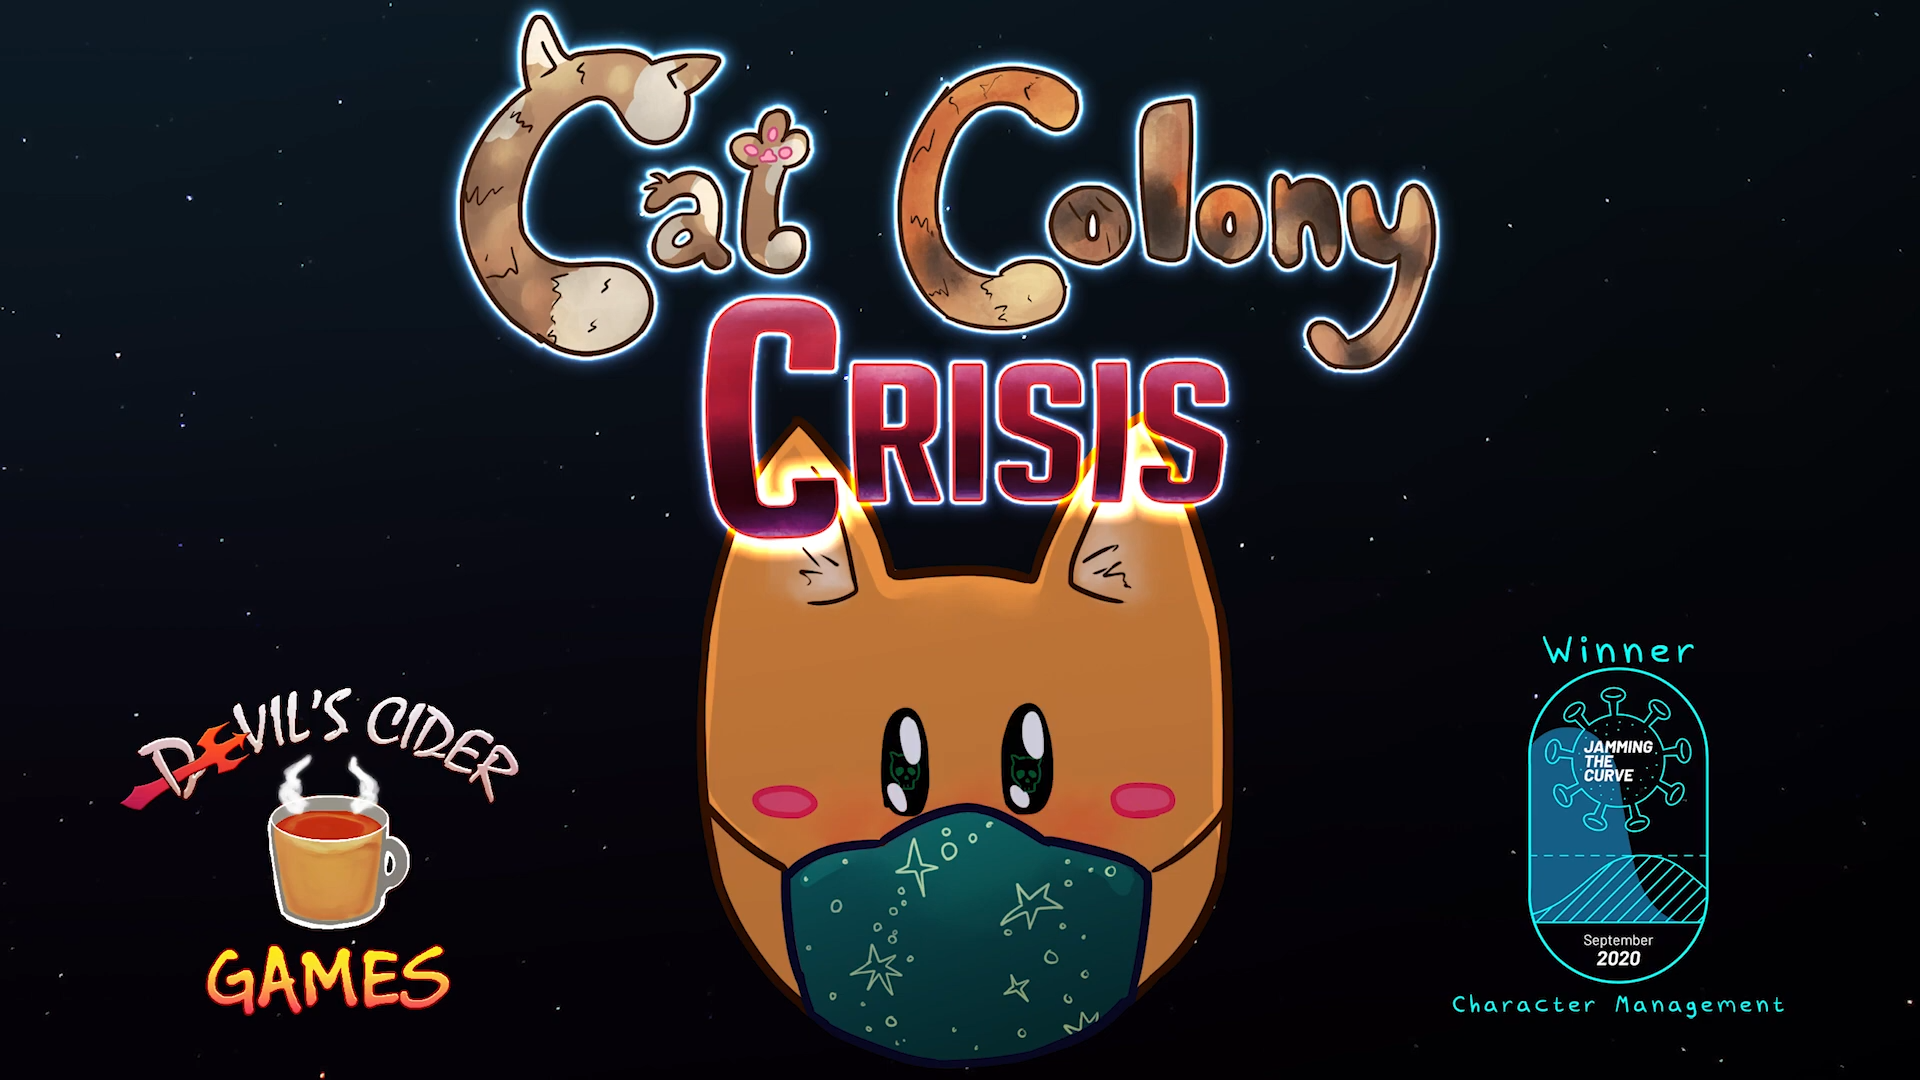 Cat Colony Crisis